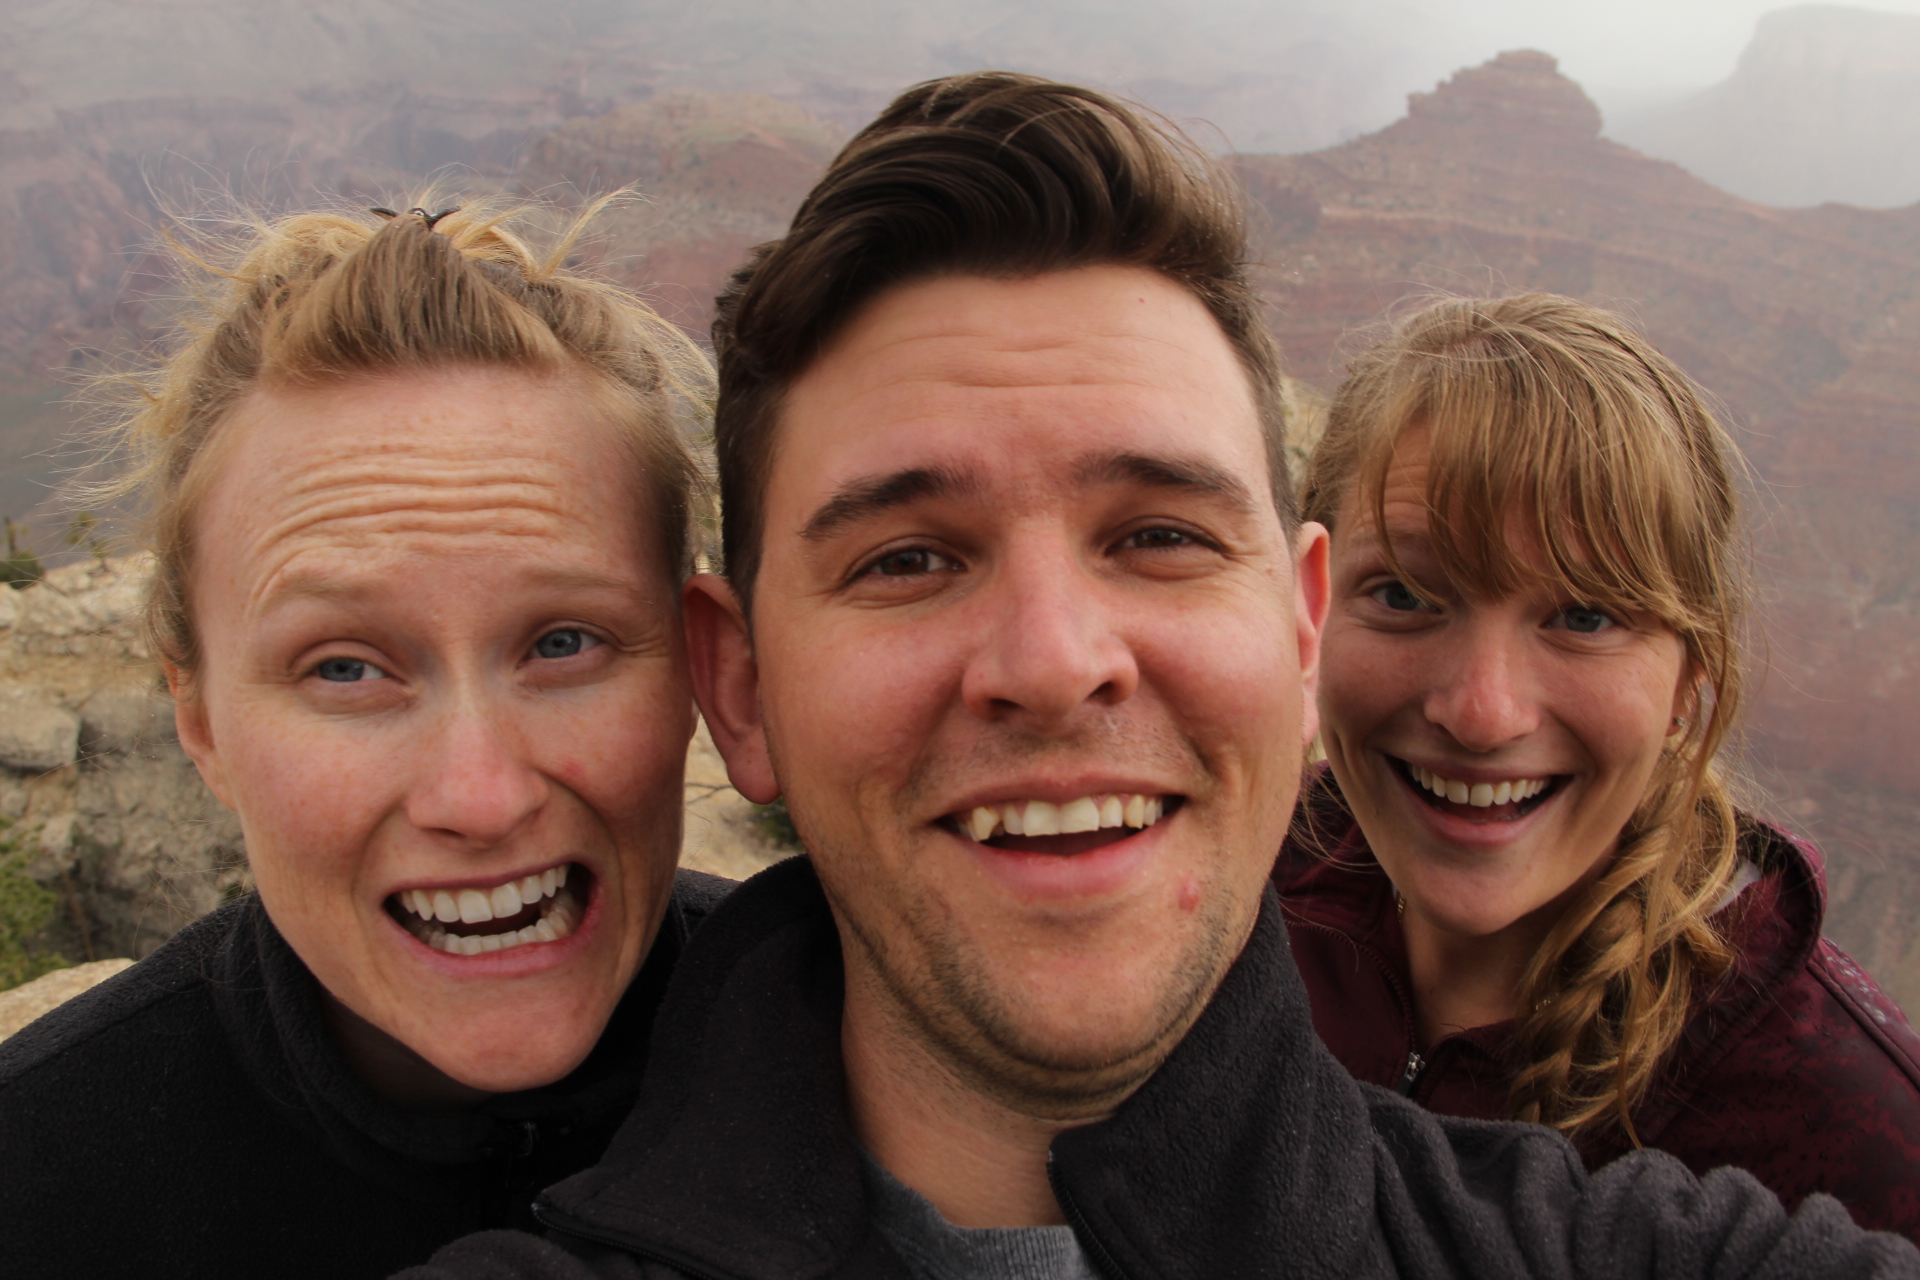 Grand Canyon Selfie, Dana and David Morris, D + D